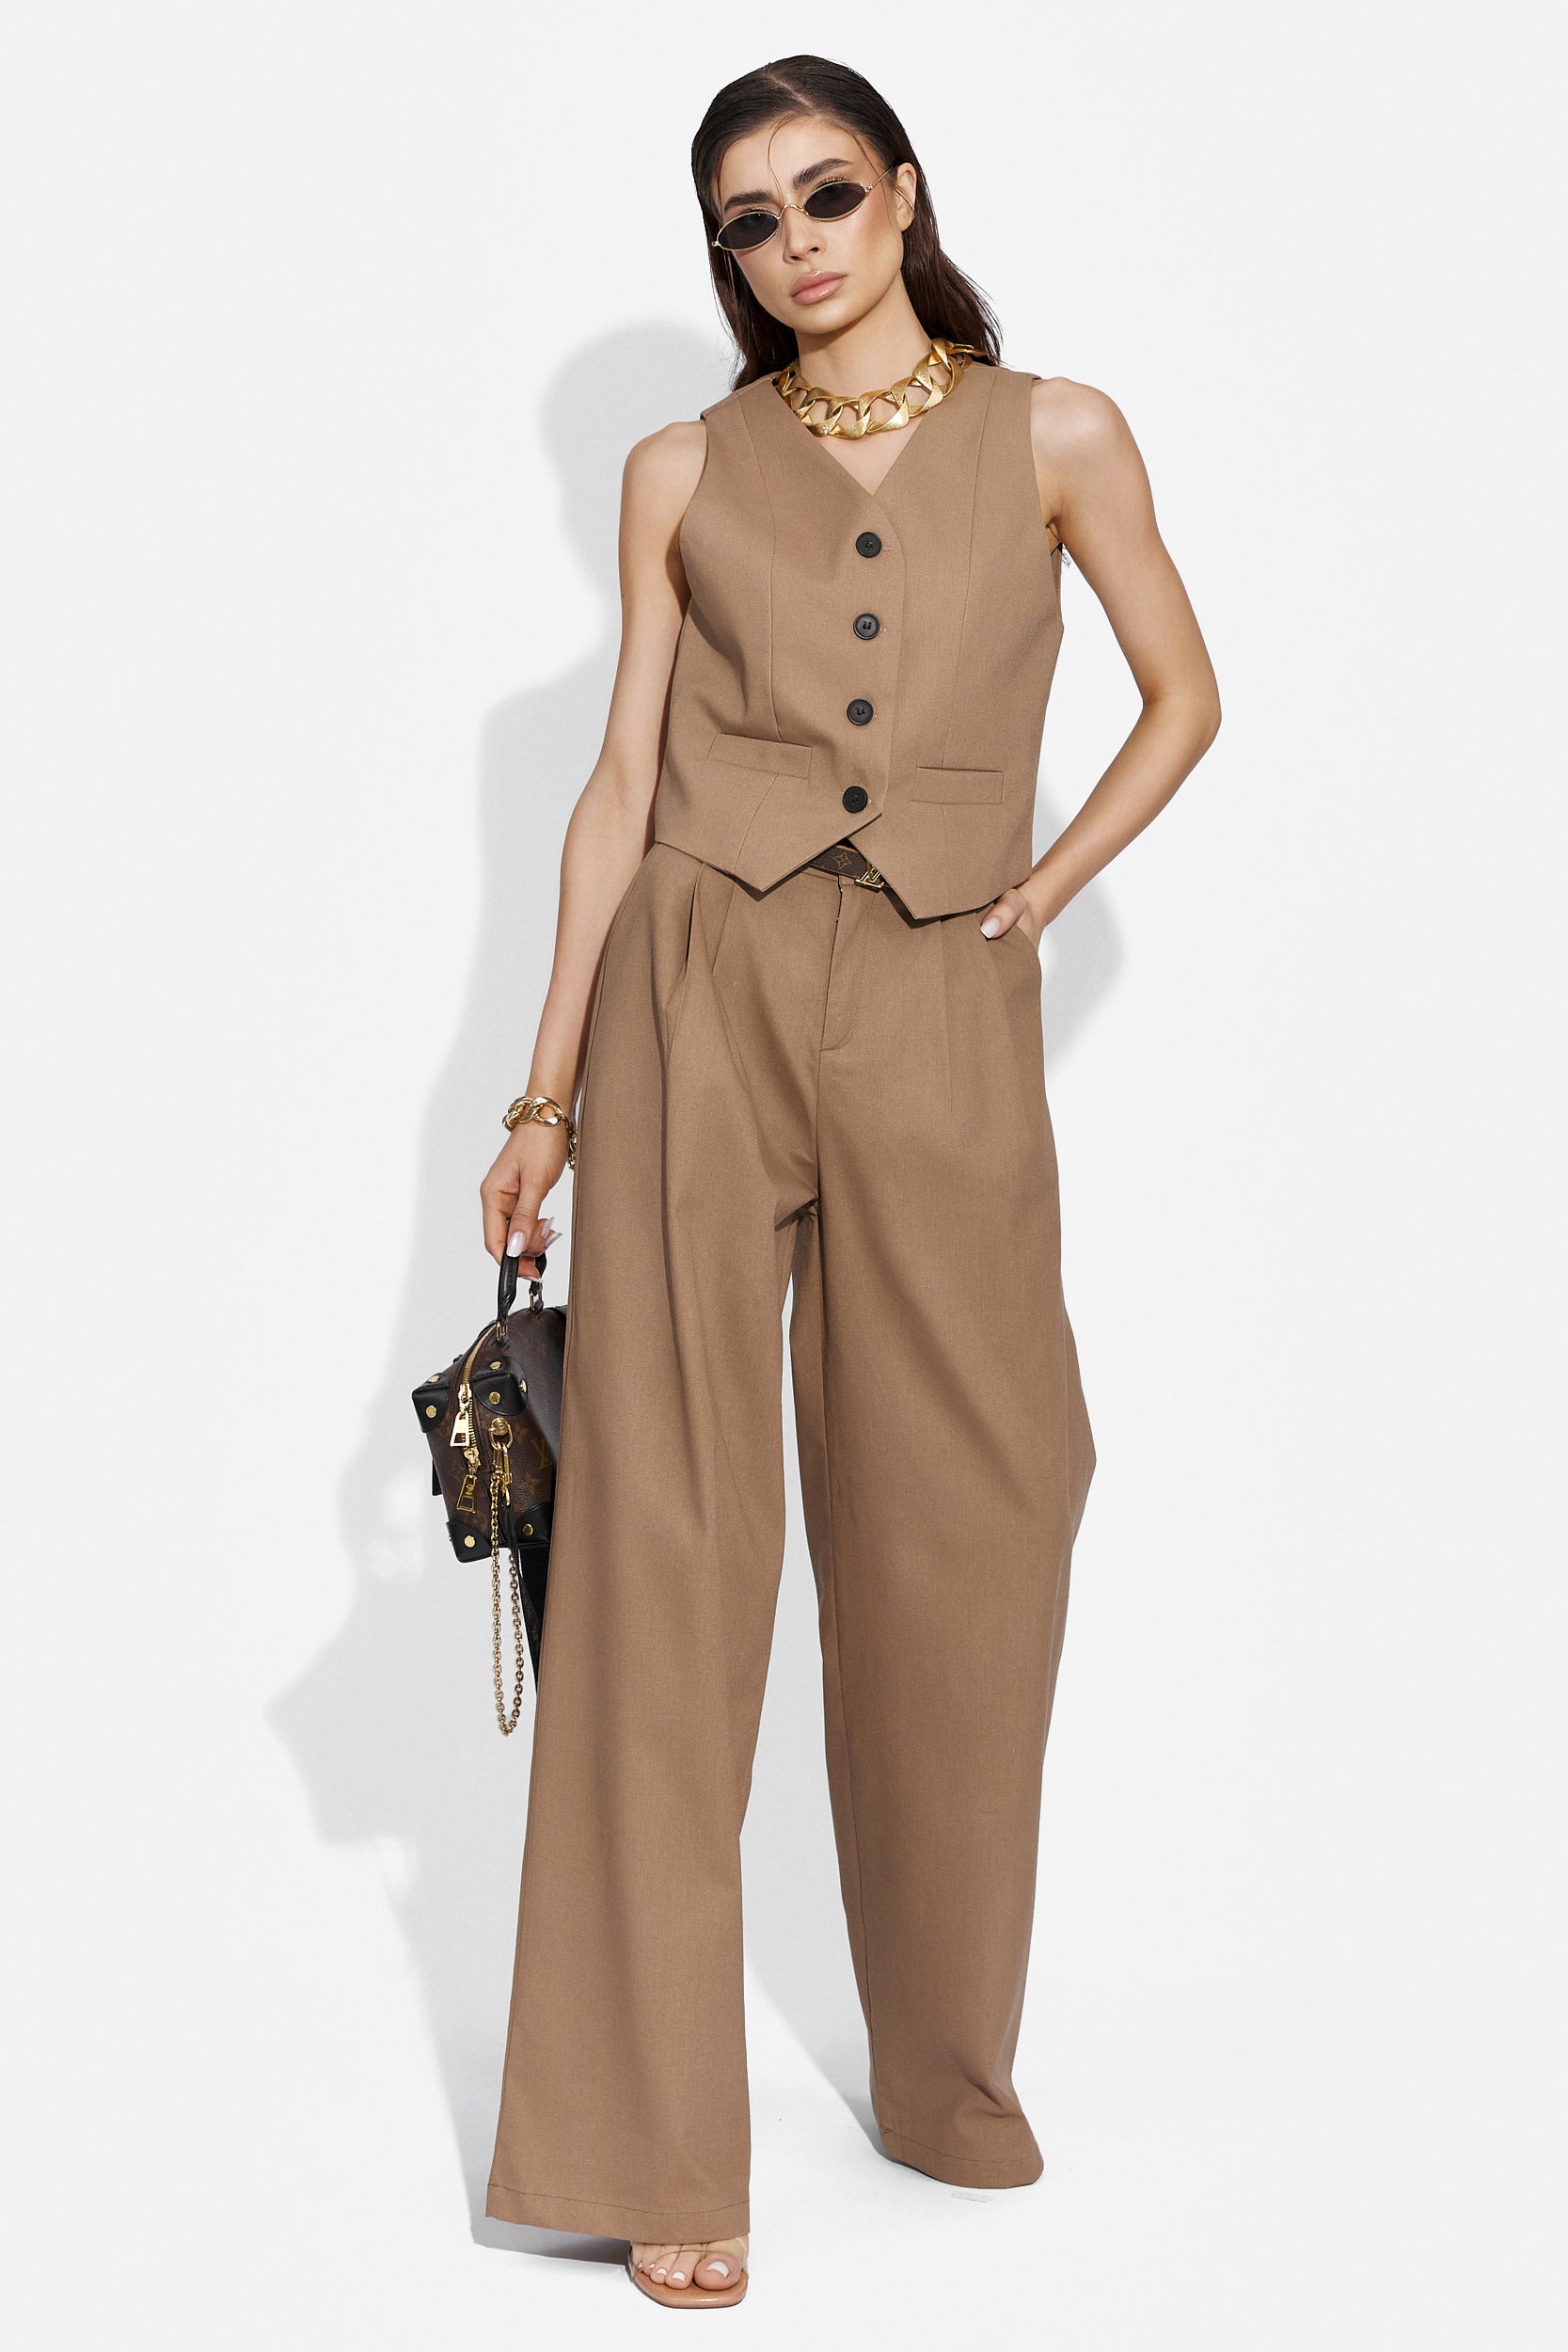 Velasy Bogas casual brown ladies pants suit